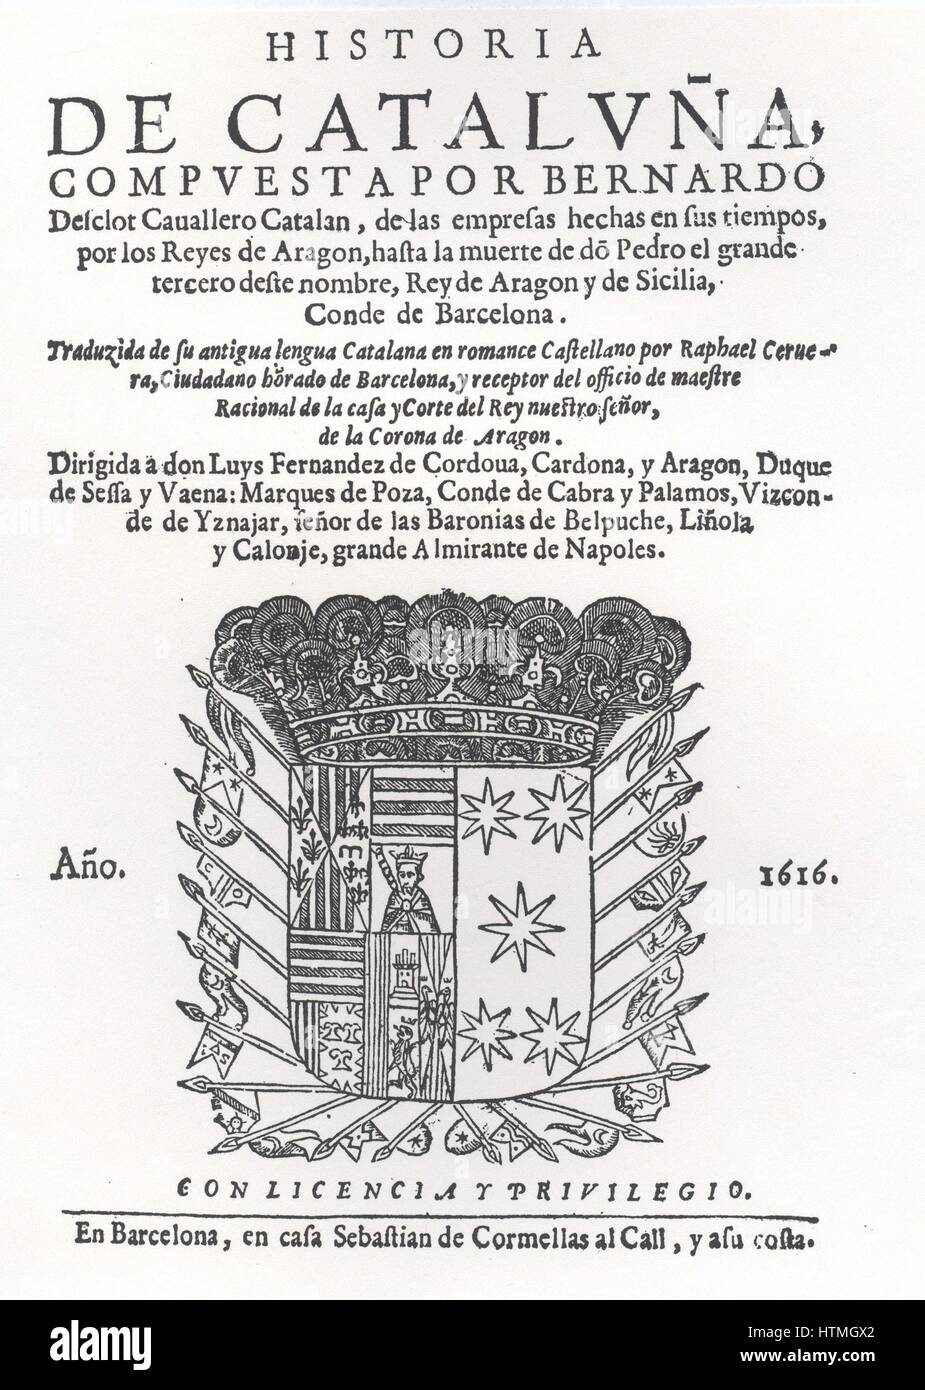 Title page of 'Historia de Catalanya', Barcelona 1616, by Bernardo Desclot, Catalan chronicler. Stock Photo